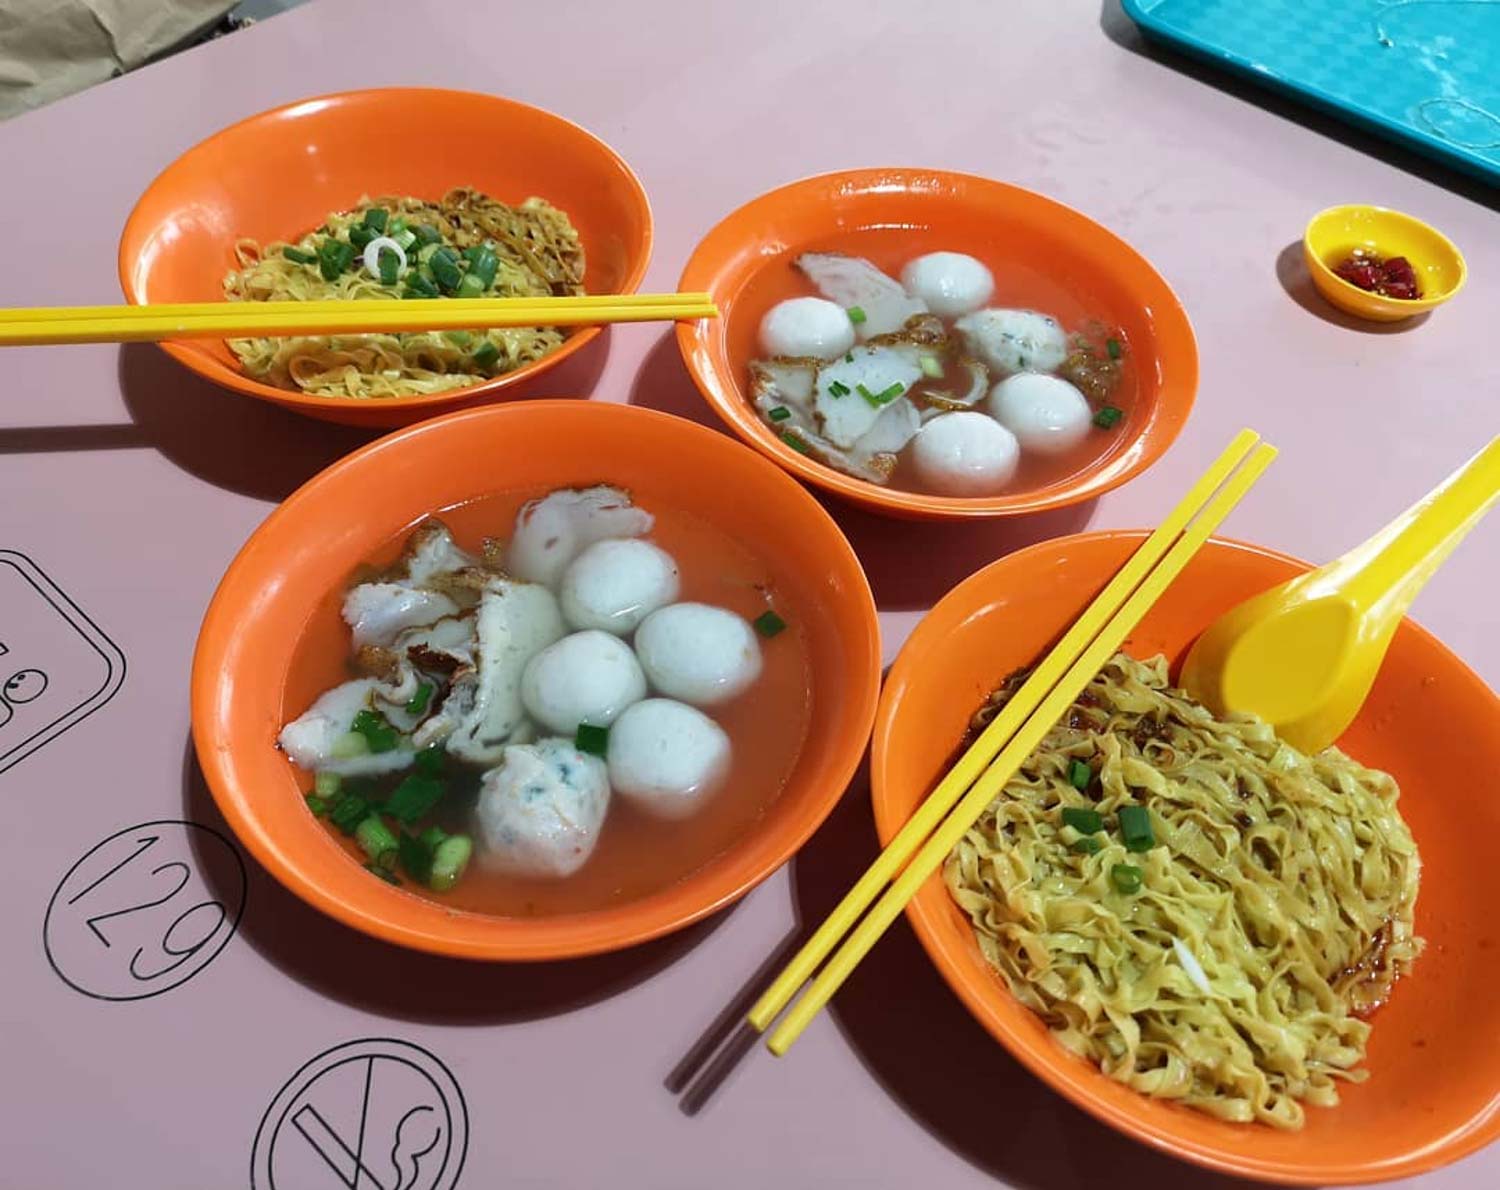 Jurong West 505 - Wen Guang Handmade Fish Ball Noodle